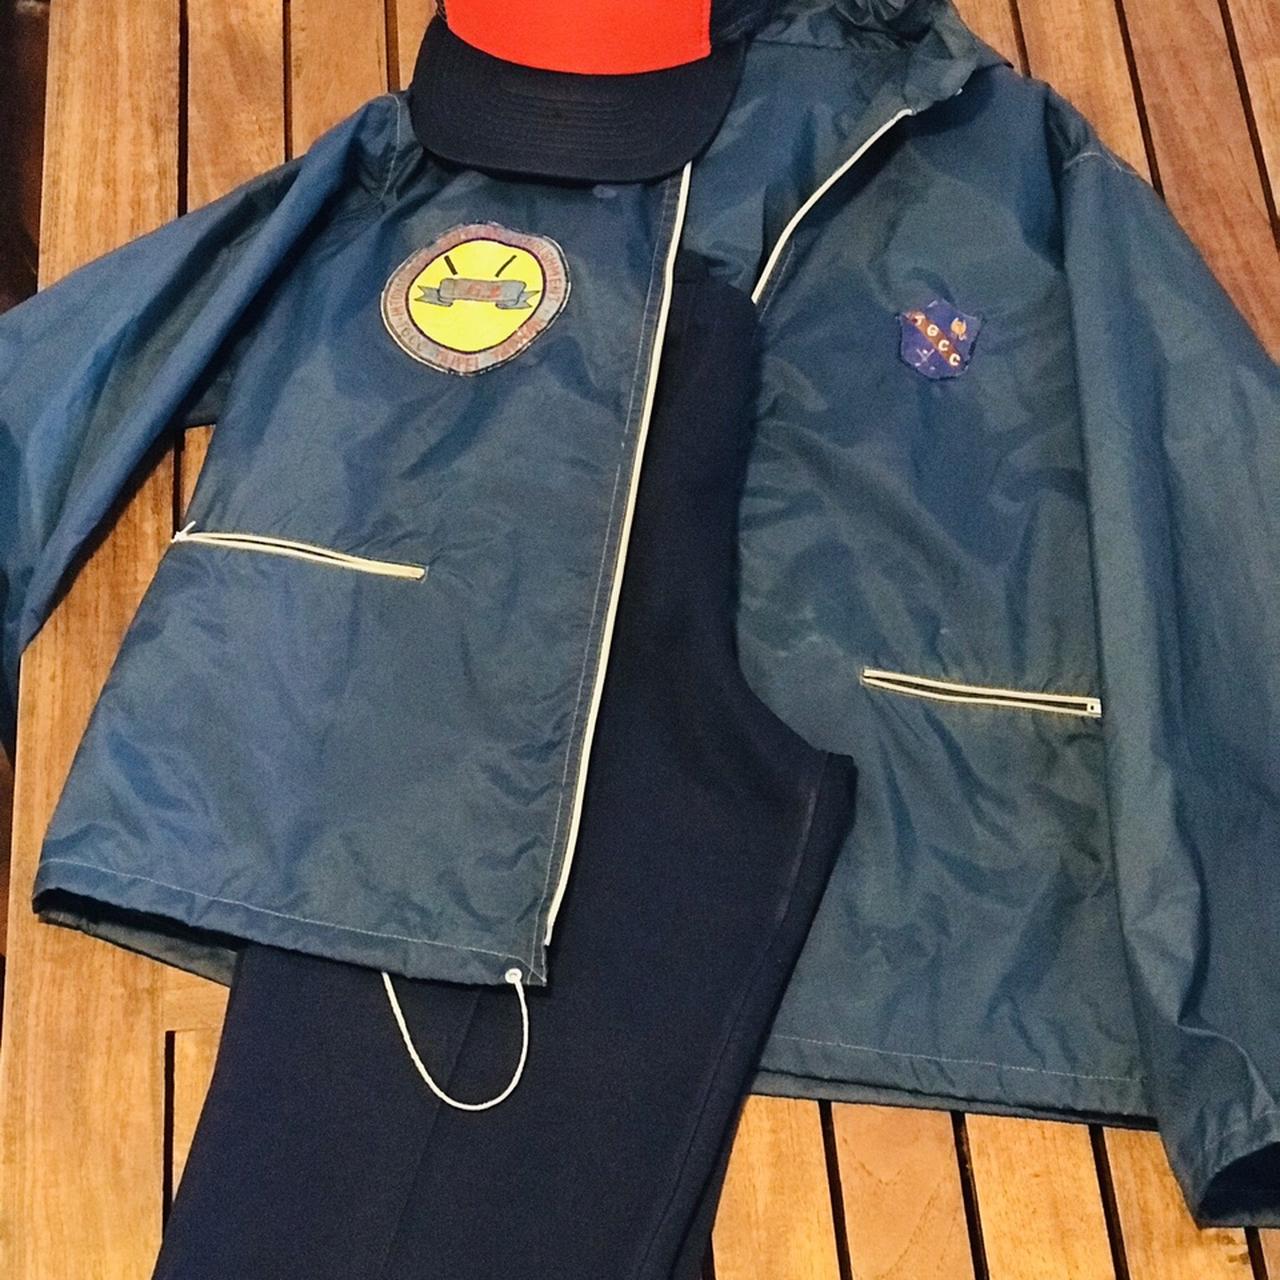 Product Image 1 - 1970’s wind breaker jacket, cap